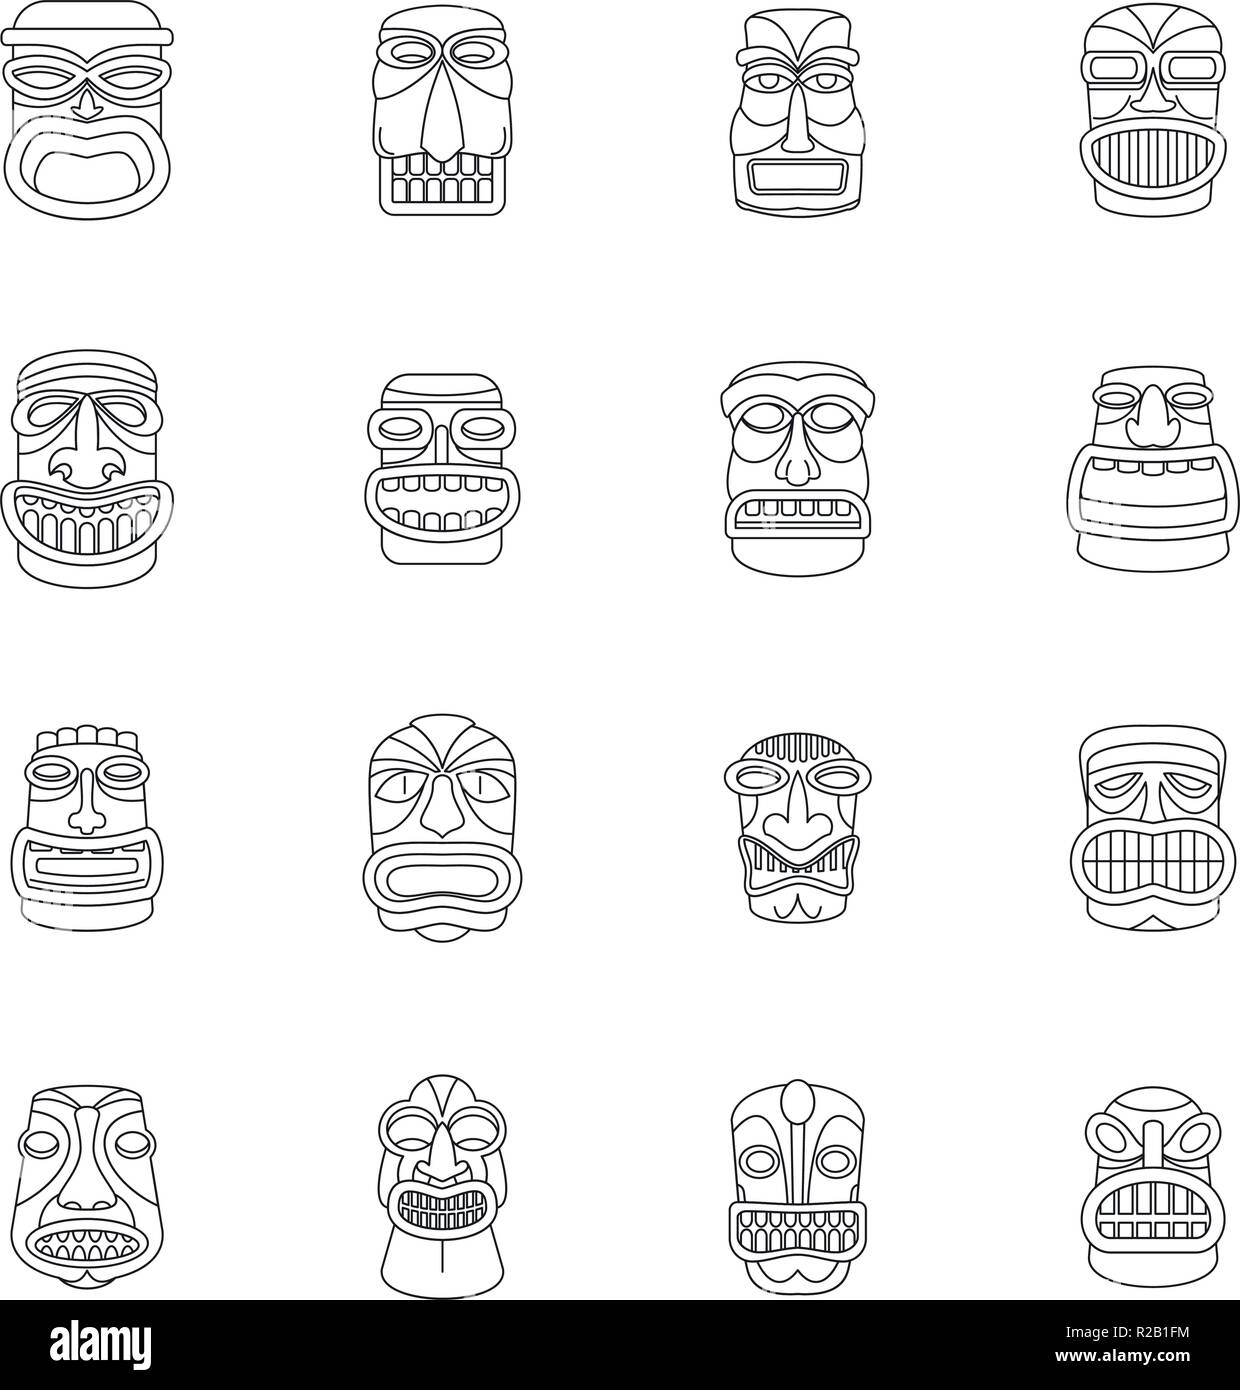 Idole Tiki hawaii aztèque face icons set. Illustration de contour 16 idole tiki hawaii aztèque face vector icons for web Illustration de Vecteur